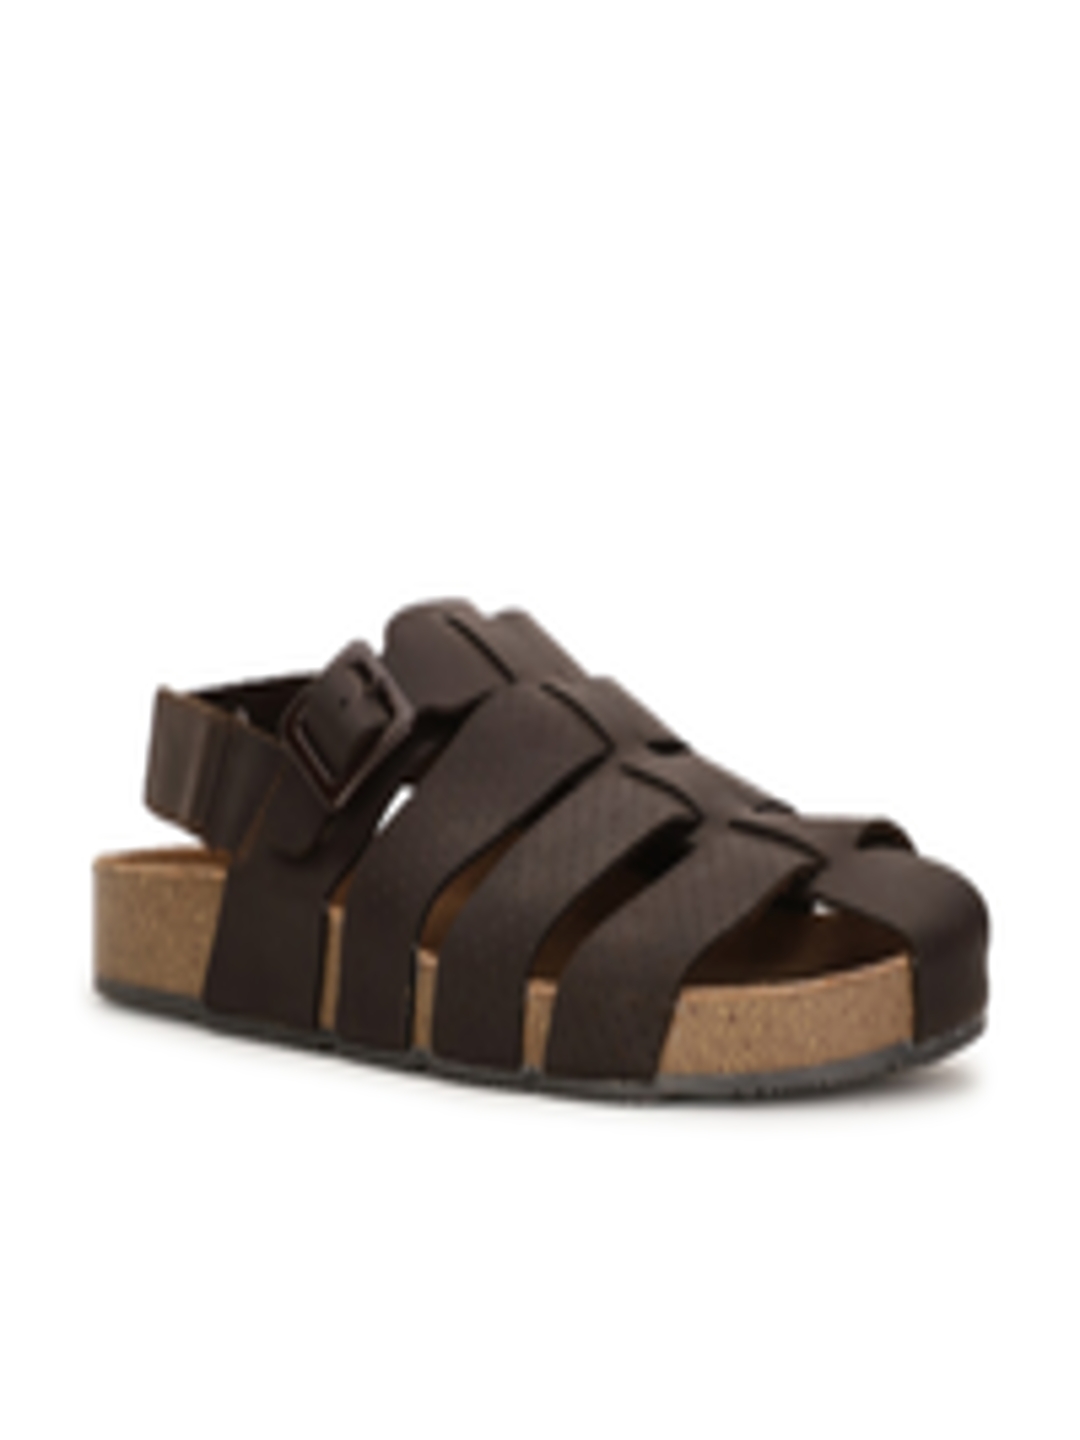 Buy Bata Men Brown Leather Comfort Sandals - Sandals for Men 20080746 ...